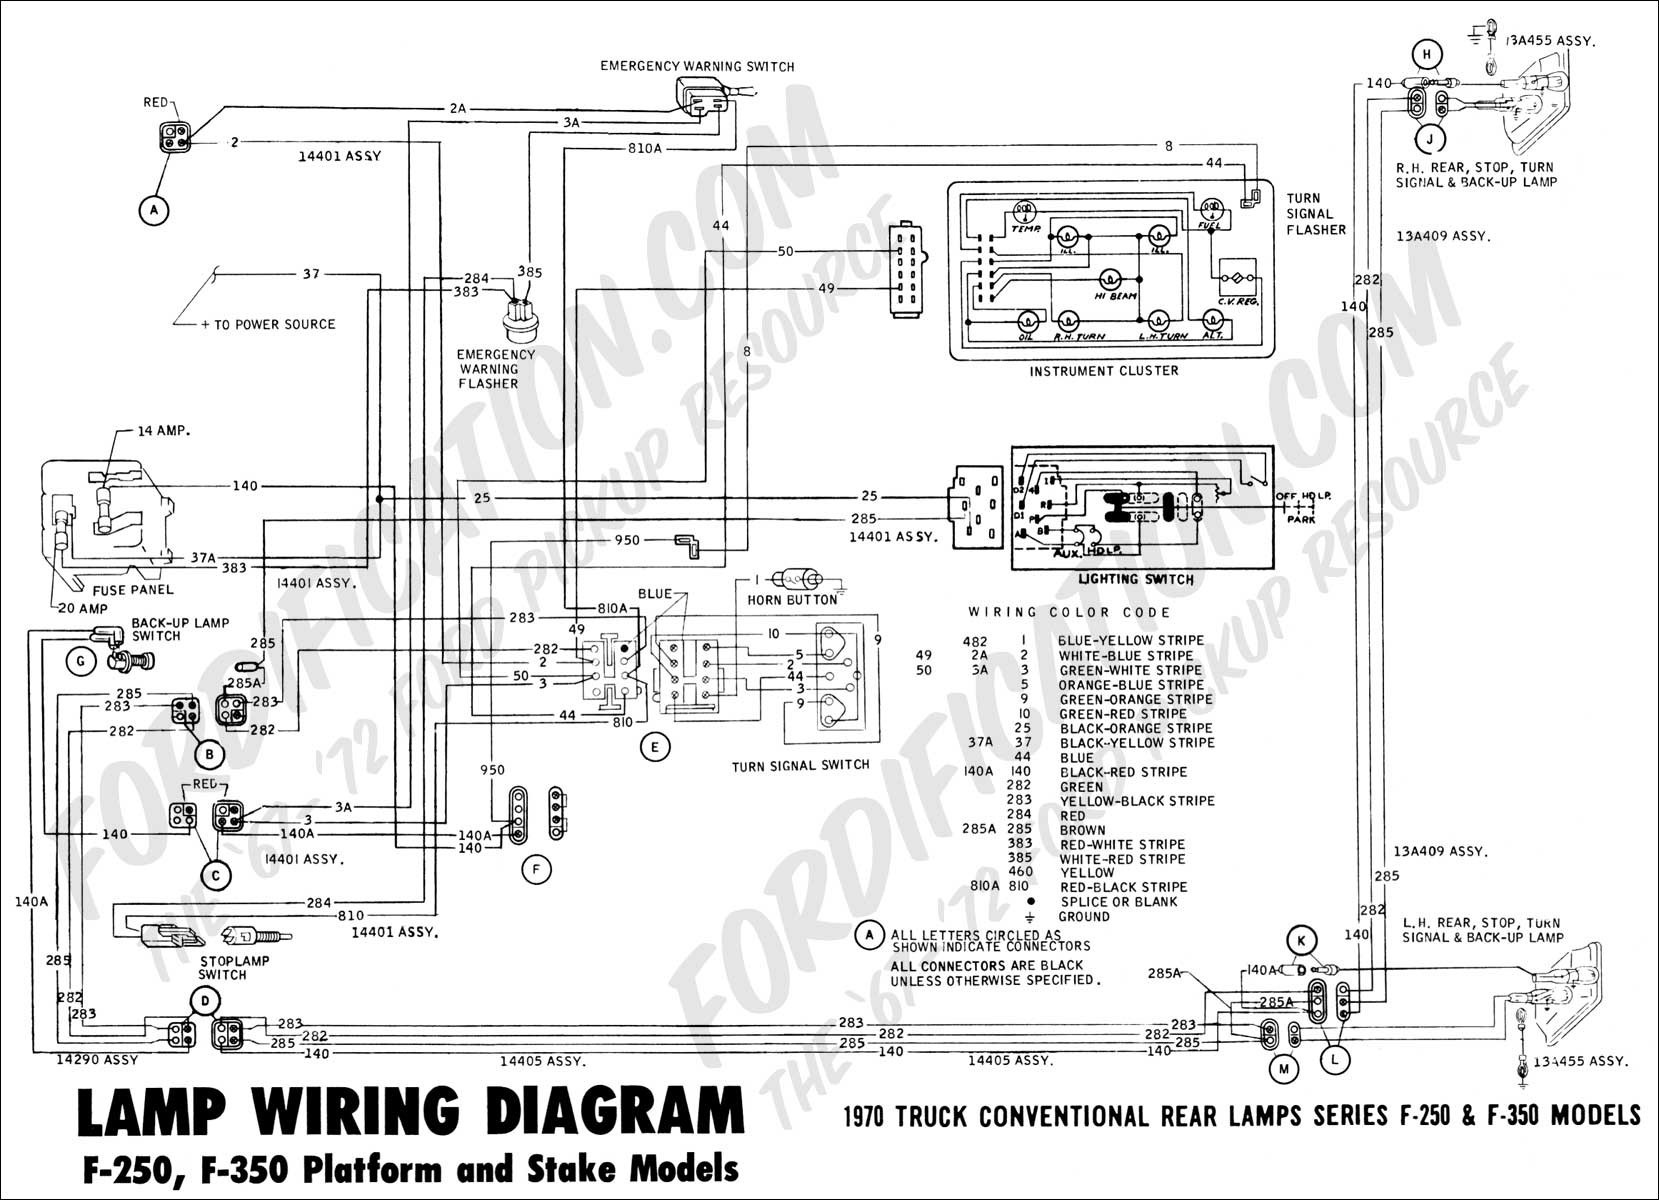 2000 F350 Tail Light Wiring Wiring Diagram Expert 2007 F150 Tail Light Wiring Diagram 2007 Ford Truck Tail Light Wiring